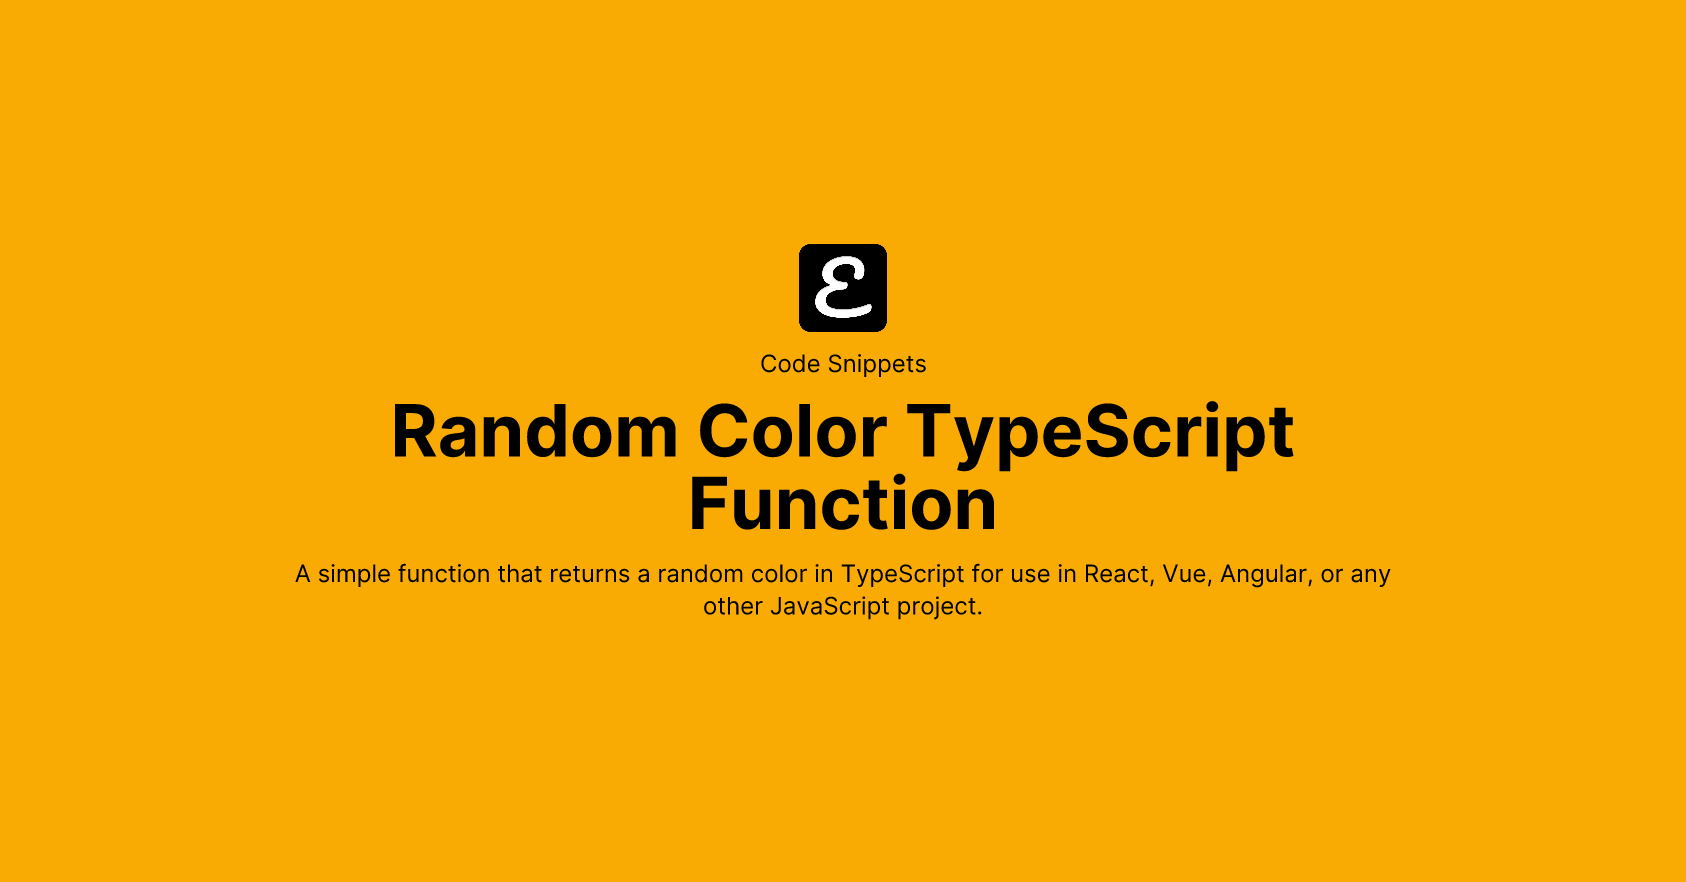 Random Color TypeScript Function by Eric David Smith